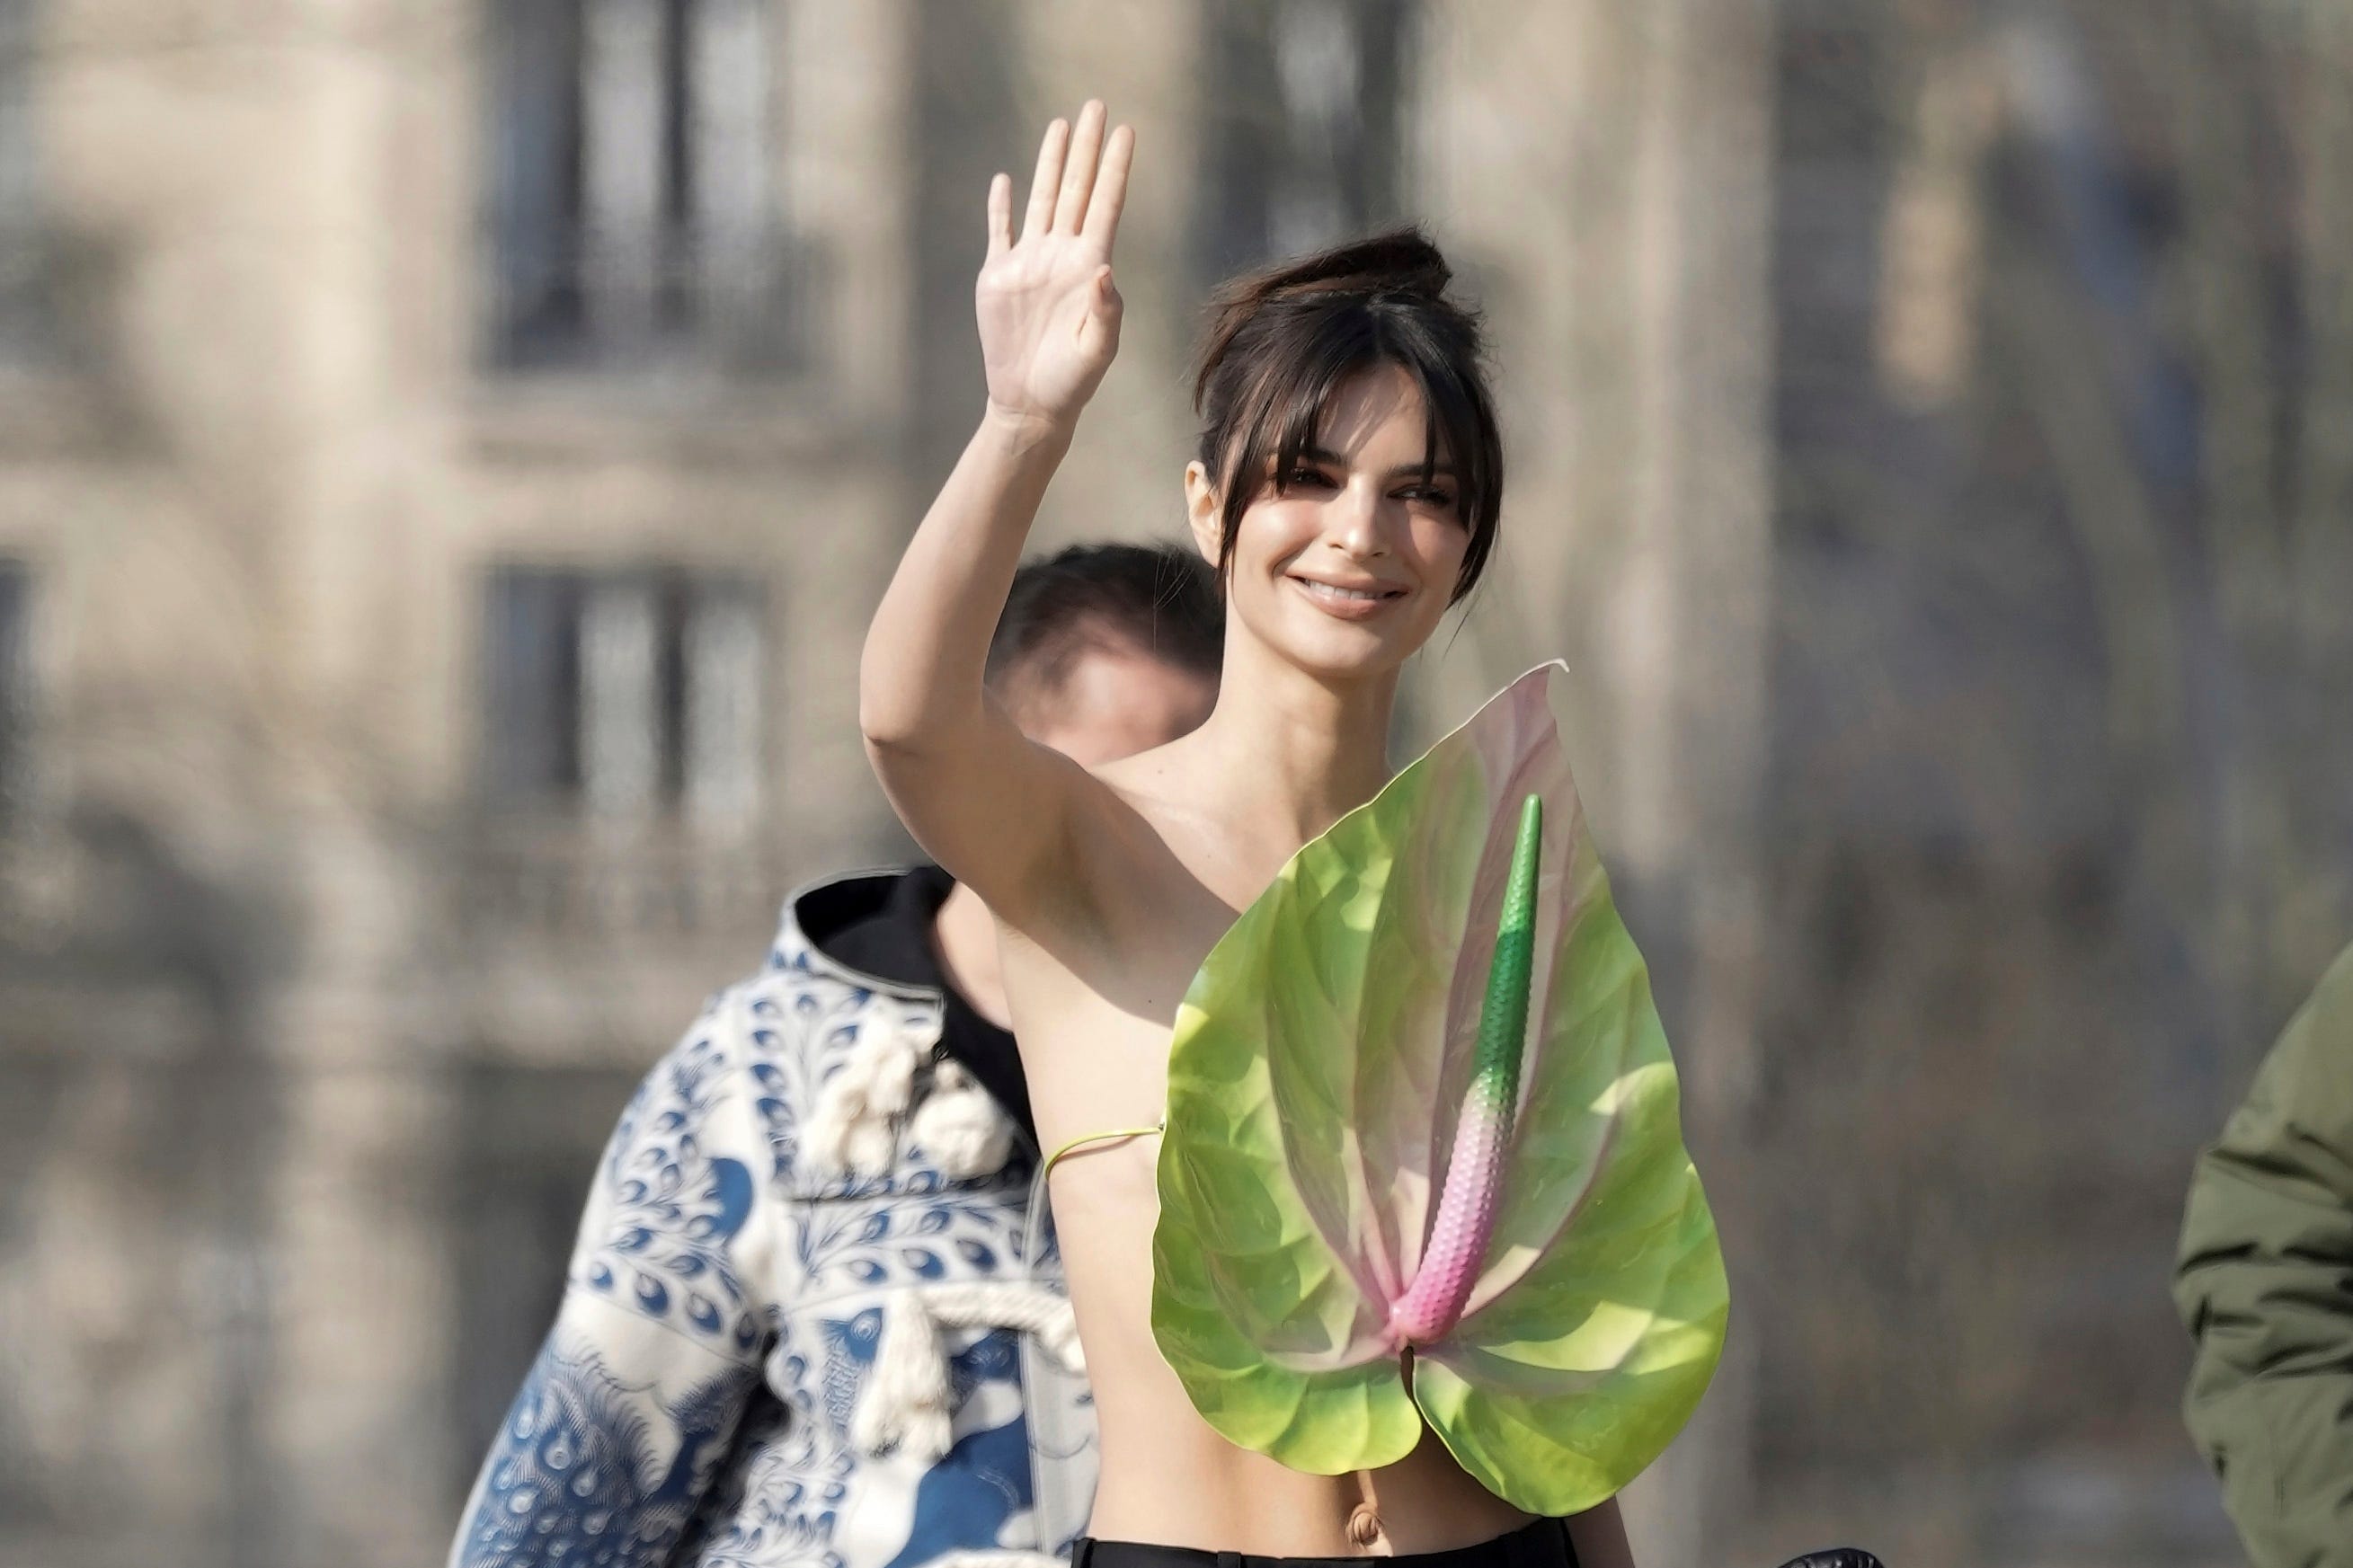 Emily Ratajkowski wears plant as a top at Paris Fashion Week